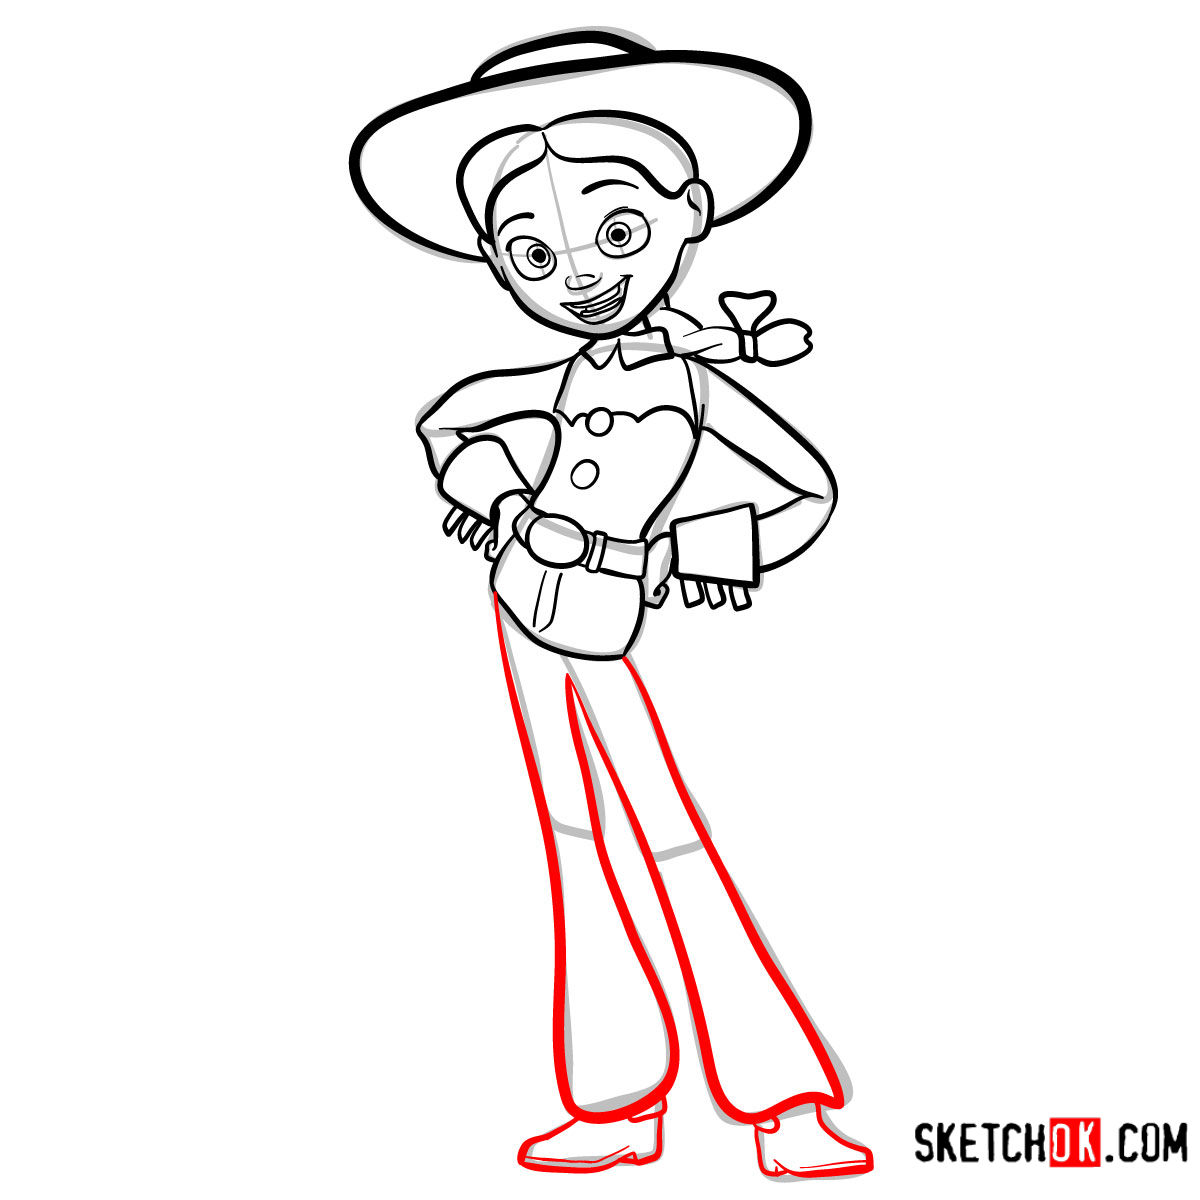 How to draw Jessie from Toy Story 2 - step 11